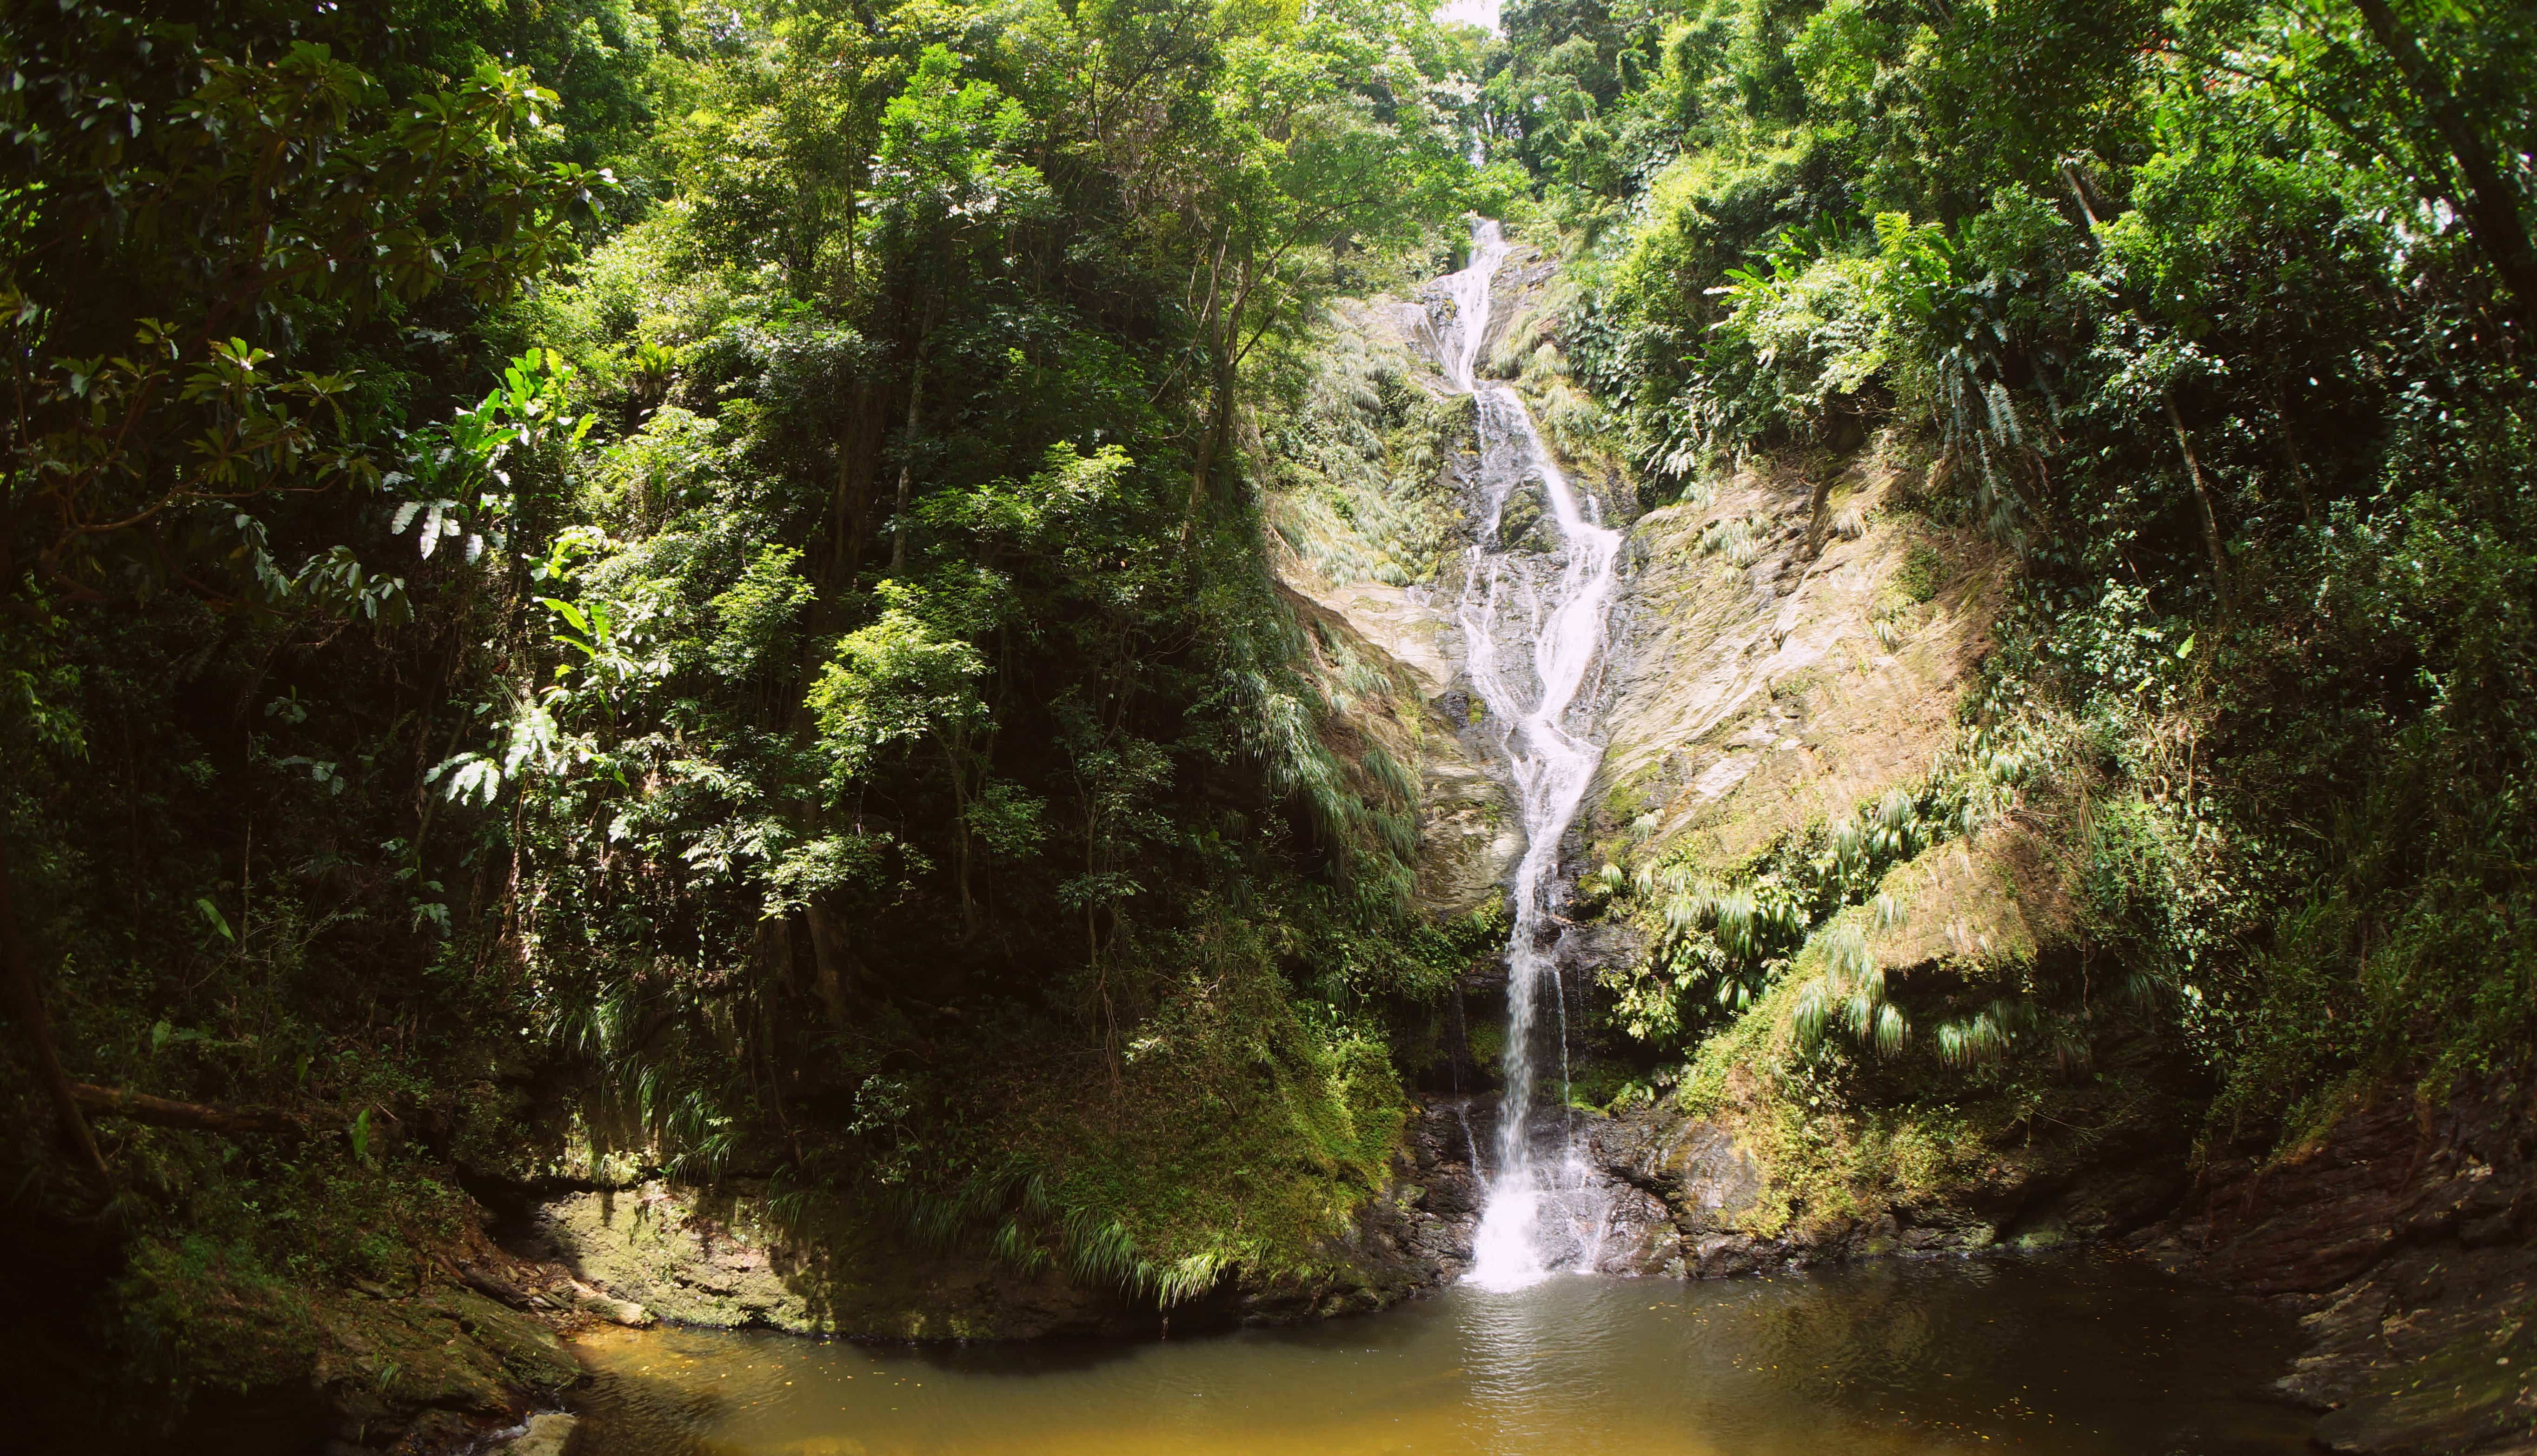 Rincon Waterfall, Trinidad | Credit: cestlavibe.com via Flickr